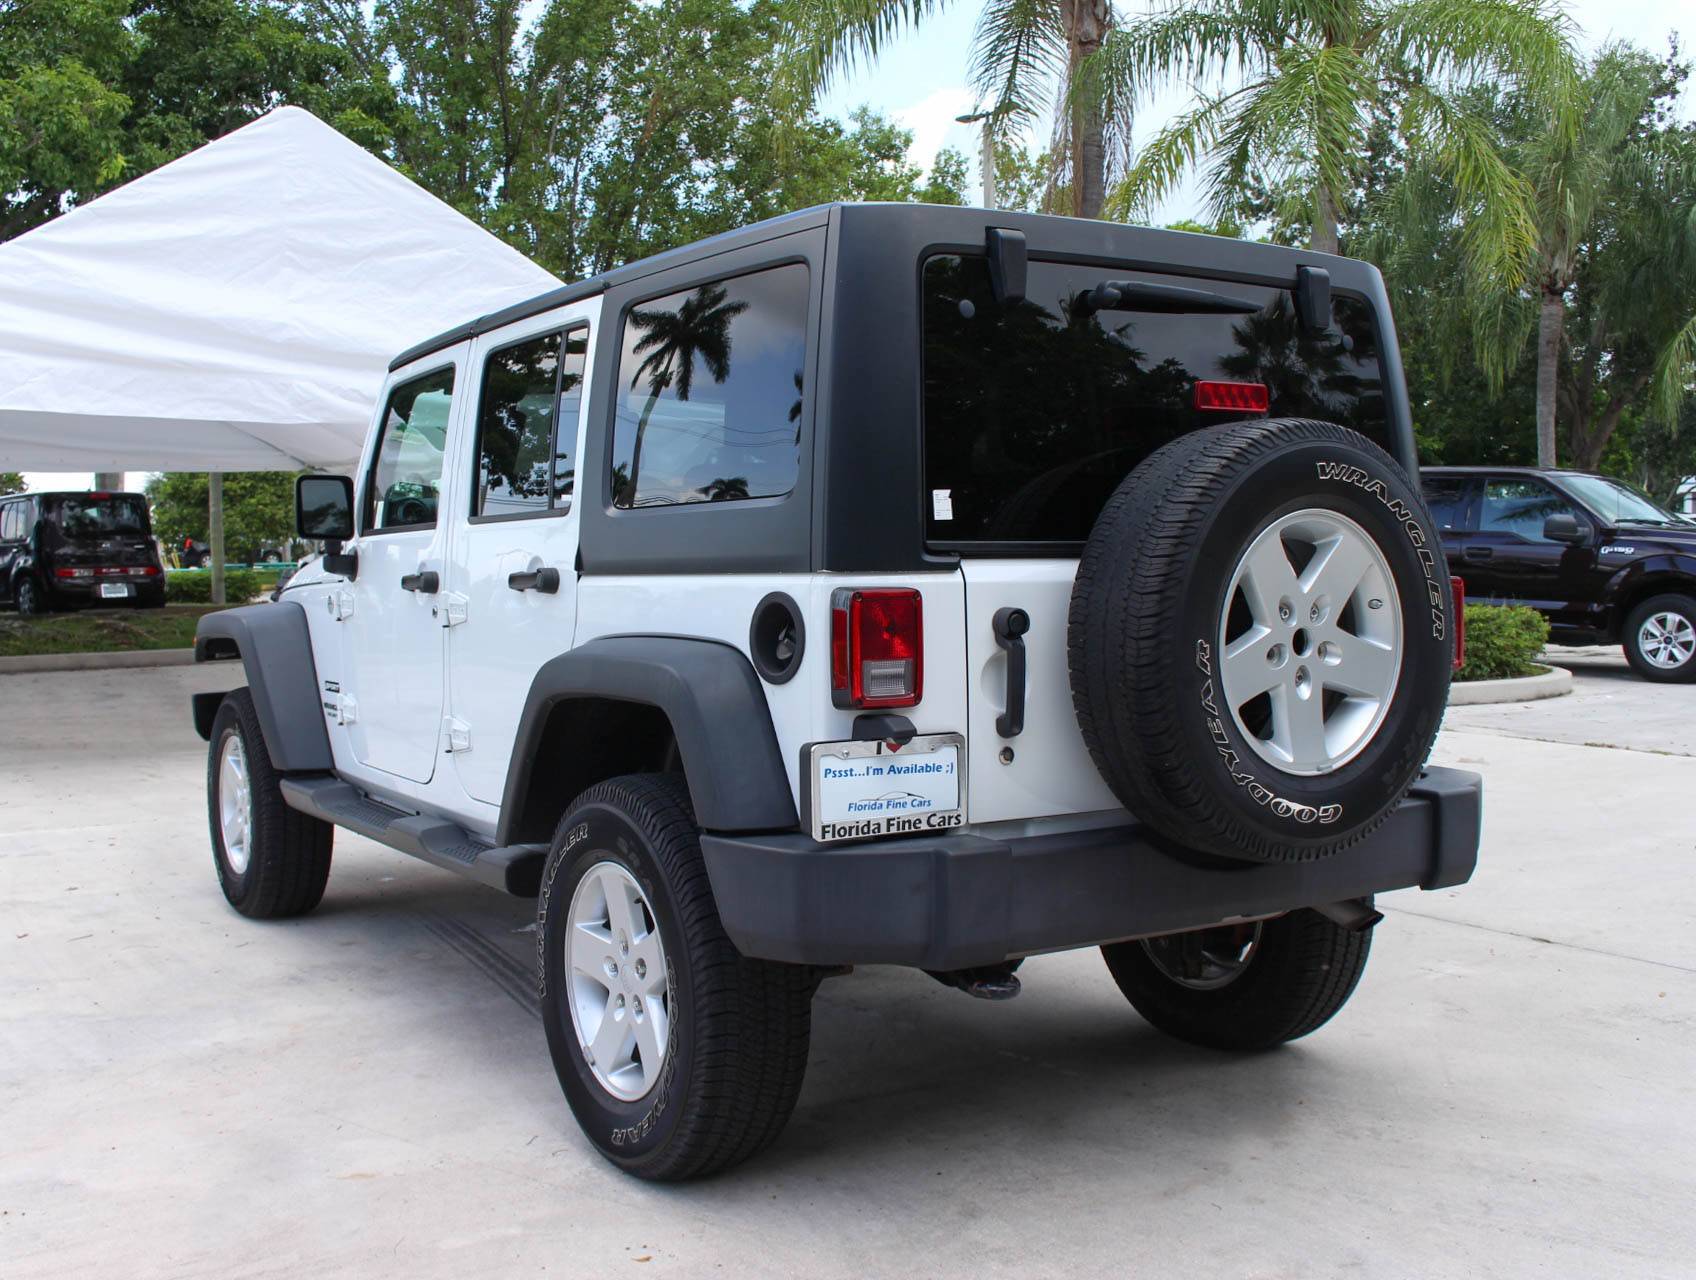 Florida Fine Cars - Used JEEP WRANGLER UNLIMITED 2015 MARGATE SPORT